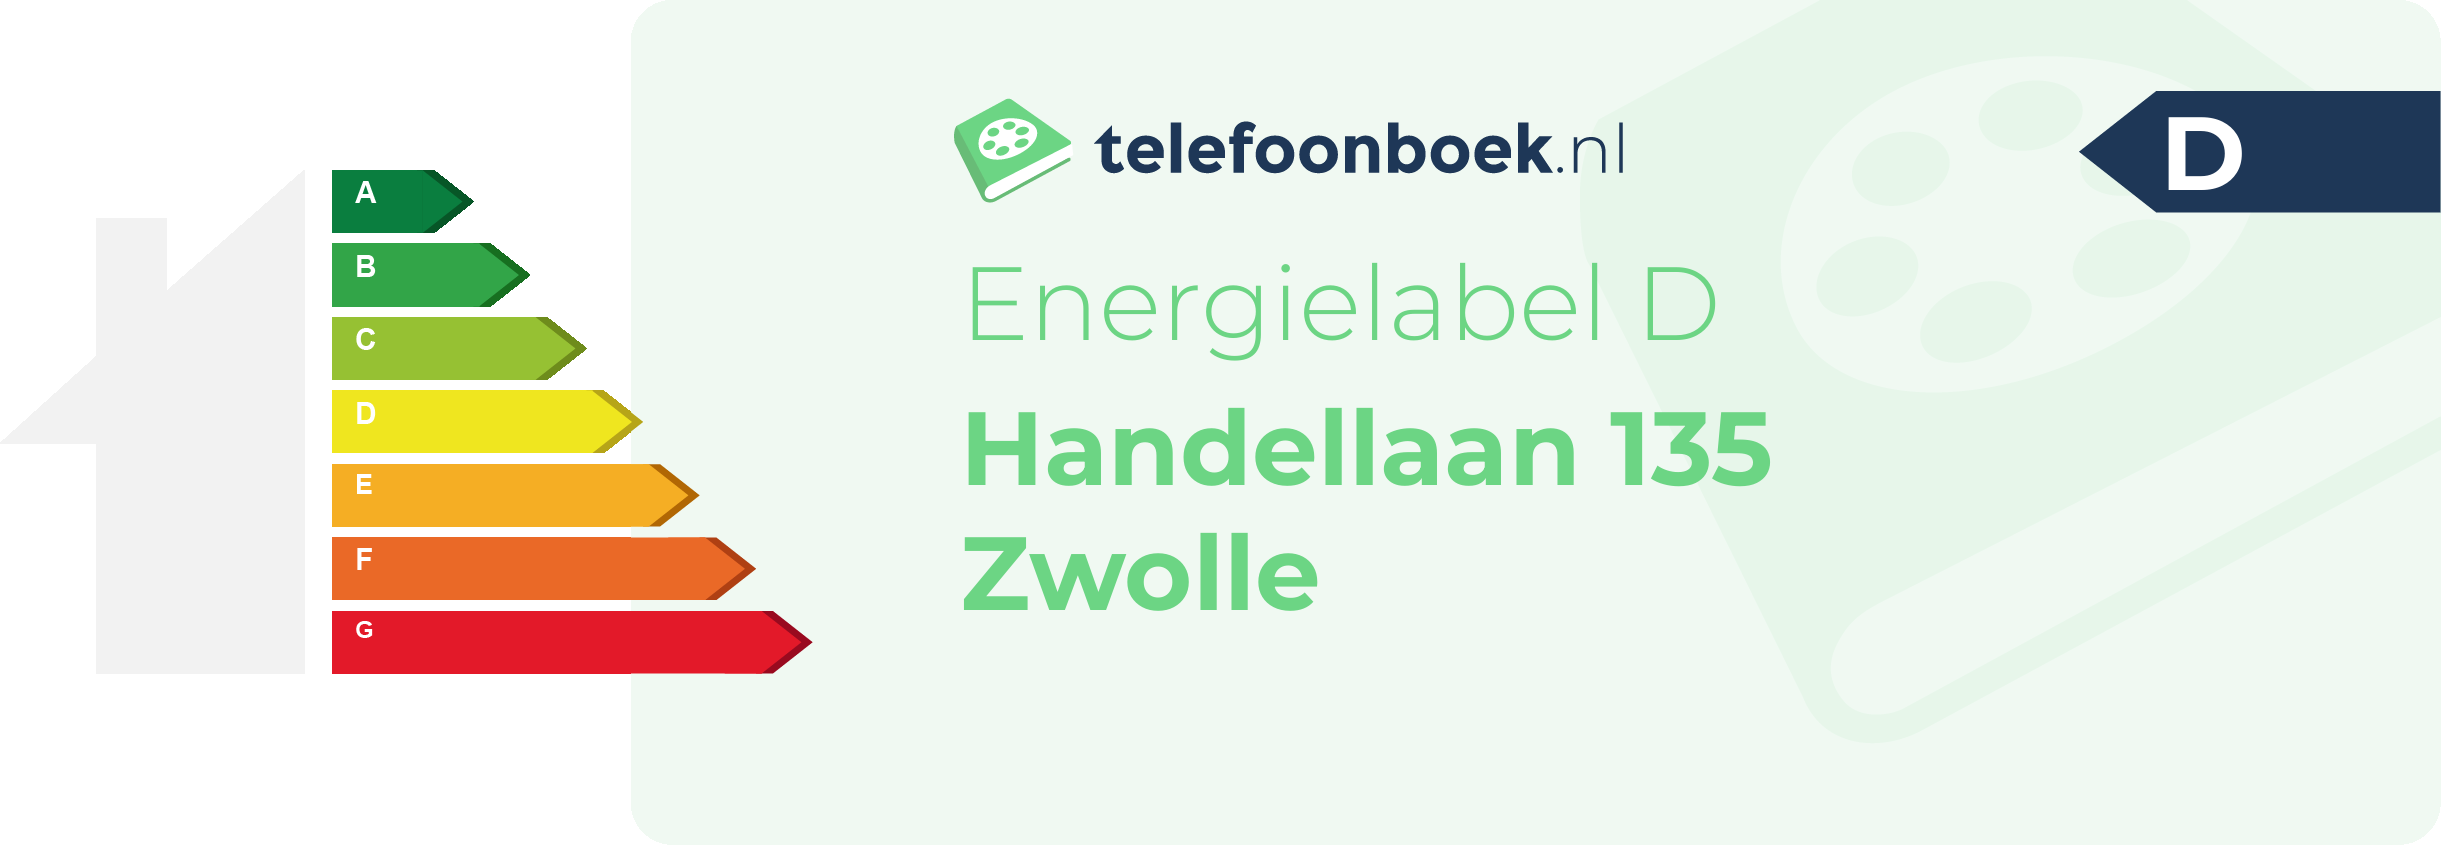 Energielabel Handellaan 135 Zwolle